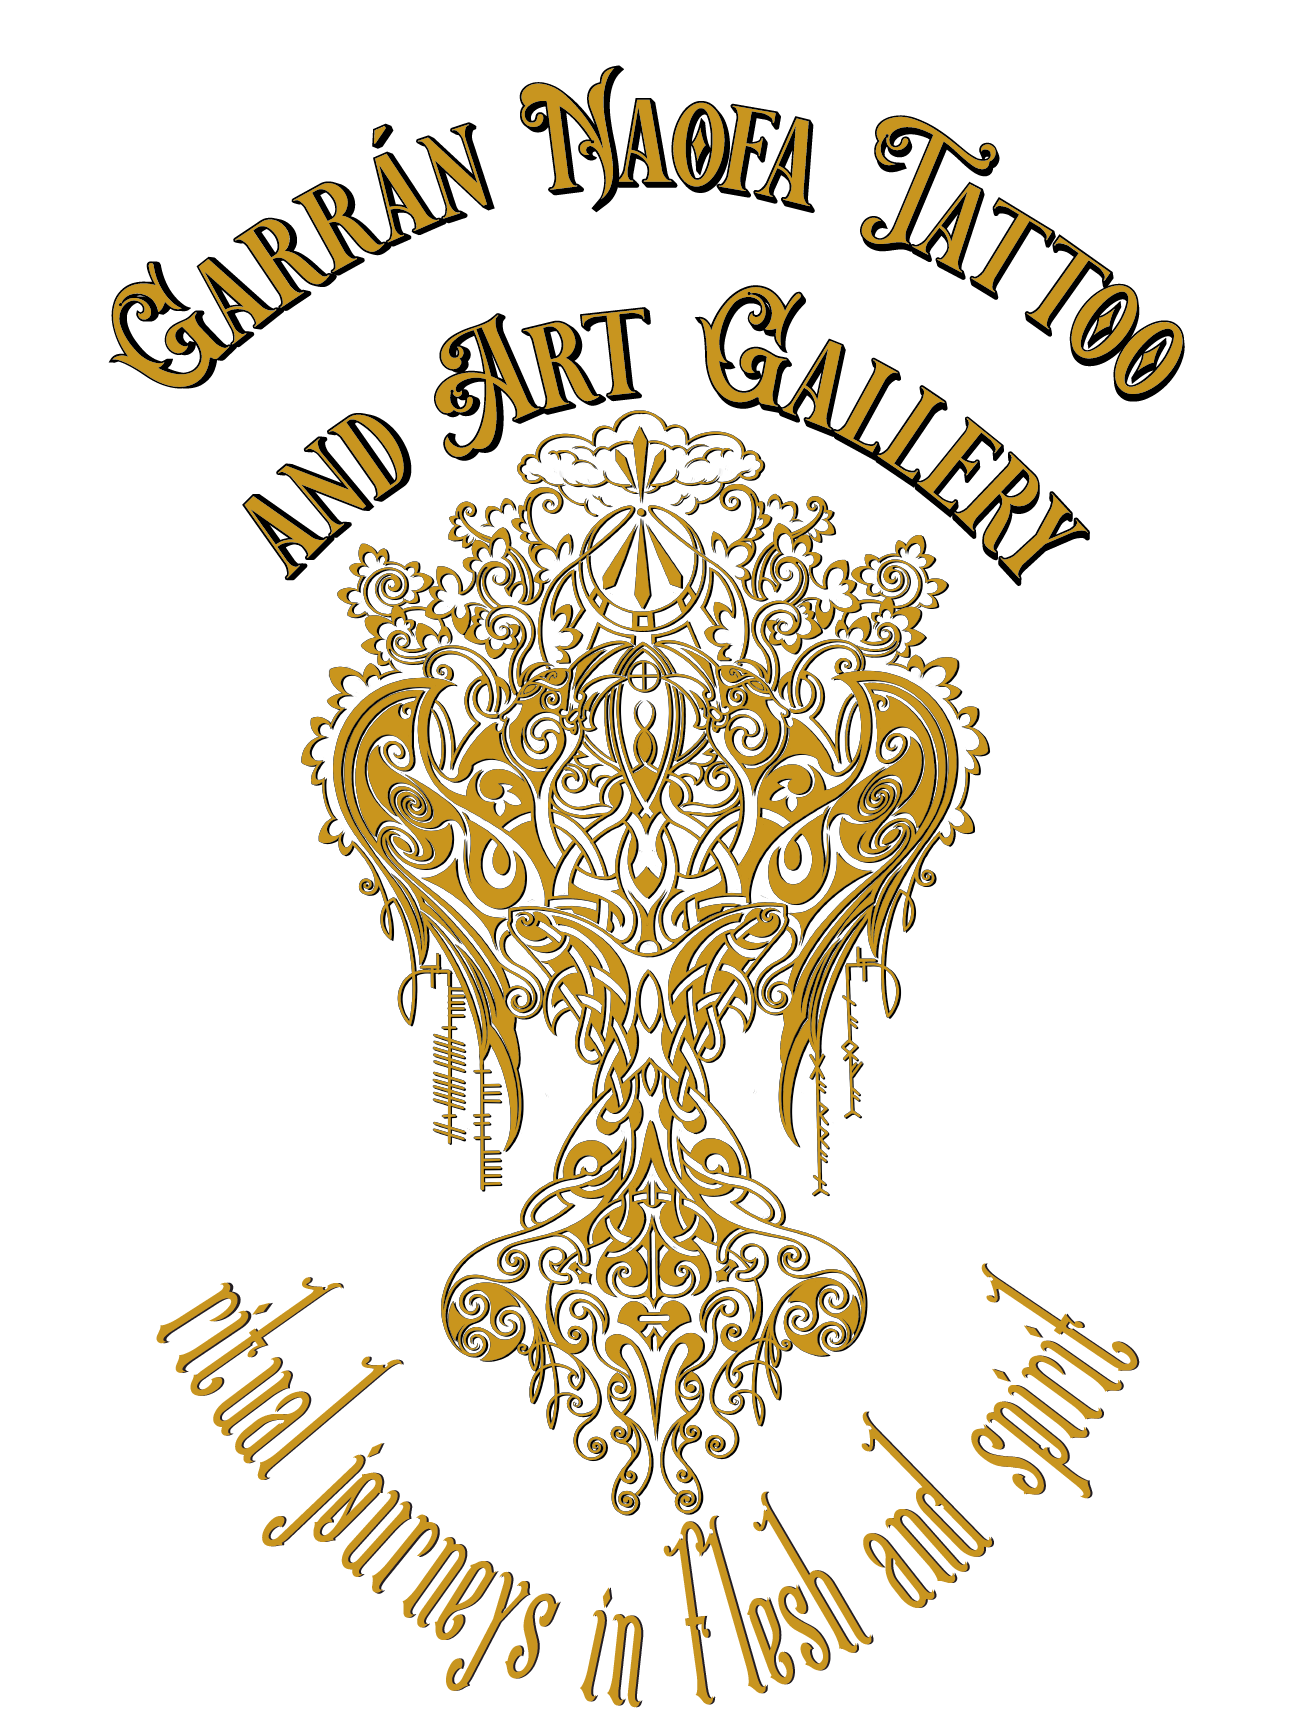 Garrán Naofa Tattoo and Art Gallery, LLC 23 Main St Suite 1, Jaffrey New Hampshire 03452